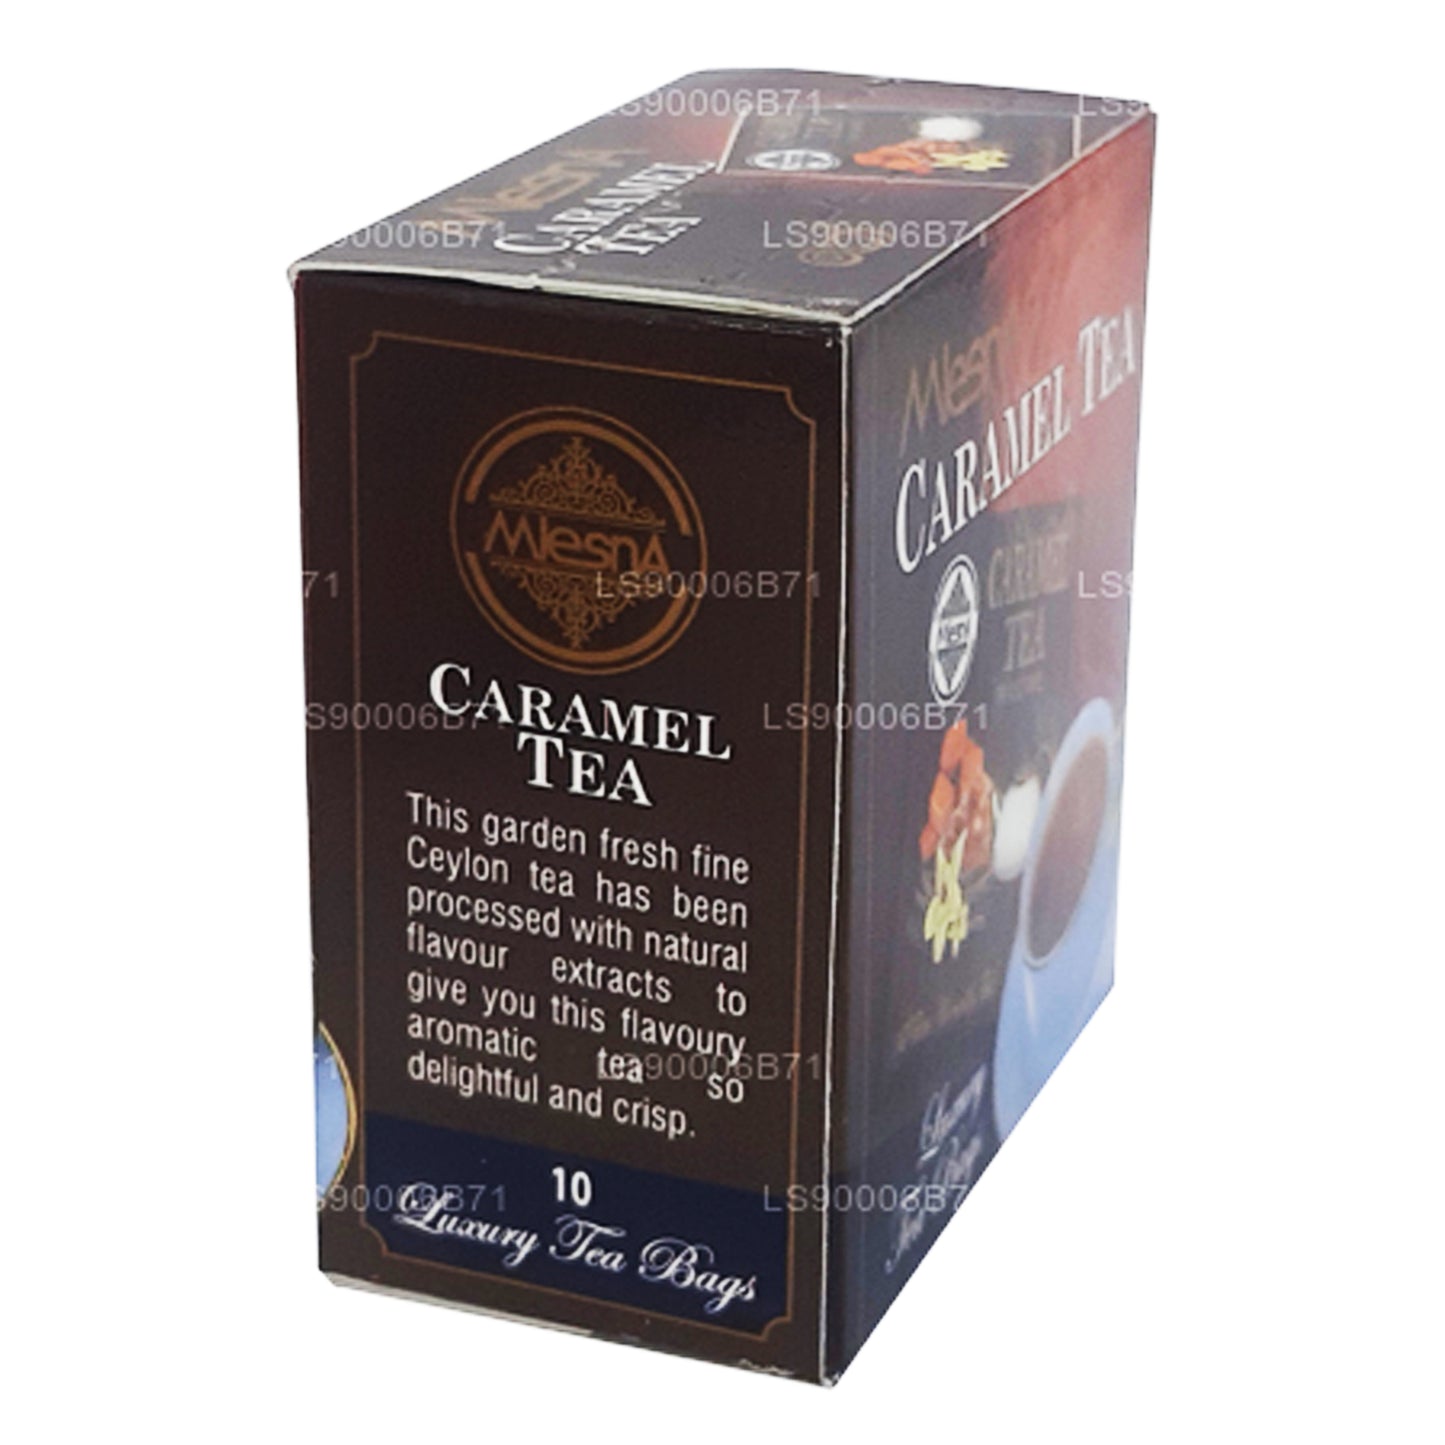 Mlesna Caramel Tea (20g) 10 Luxury Tea Bags